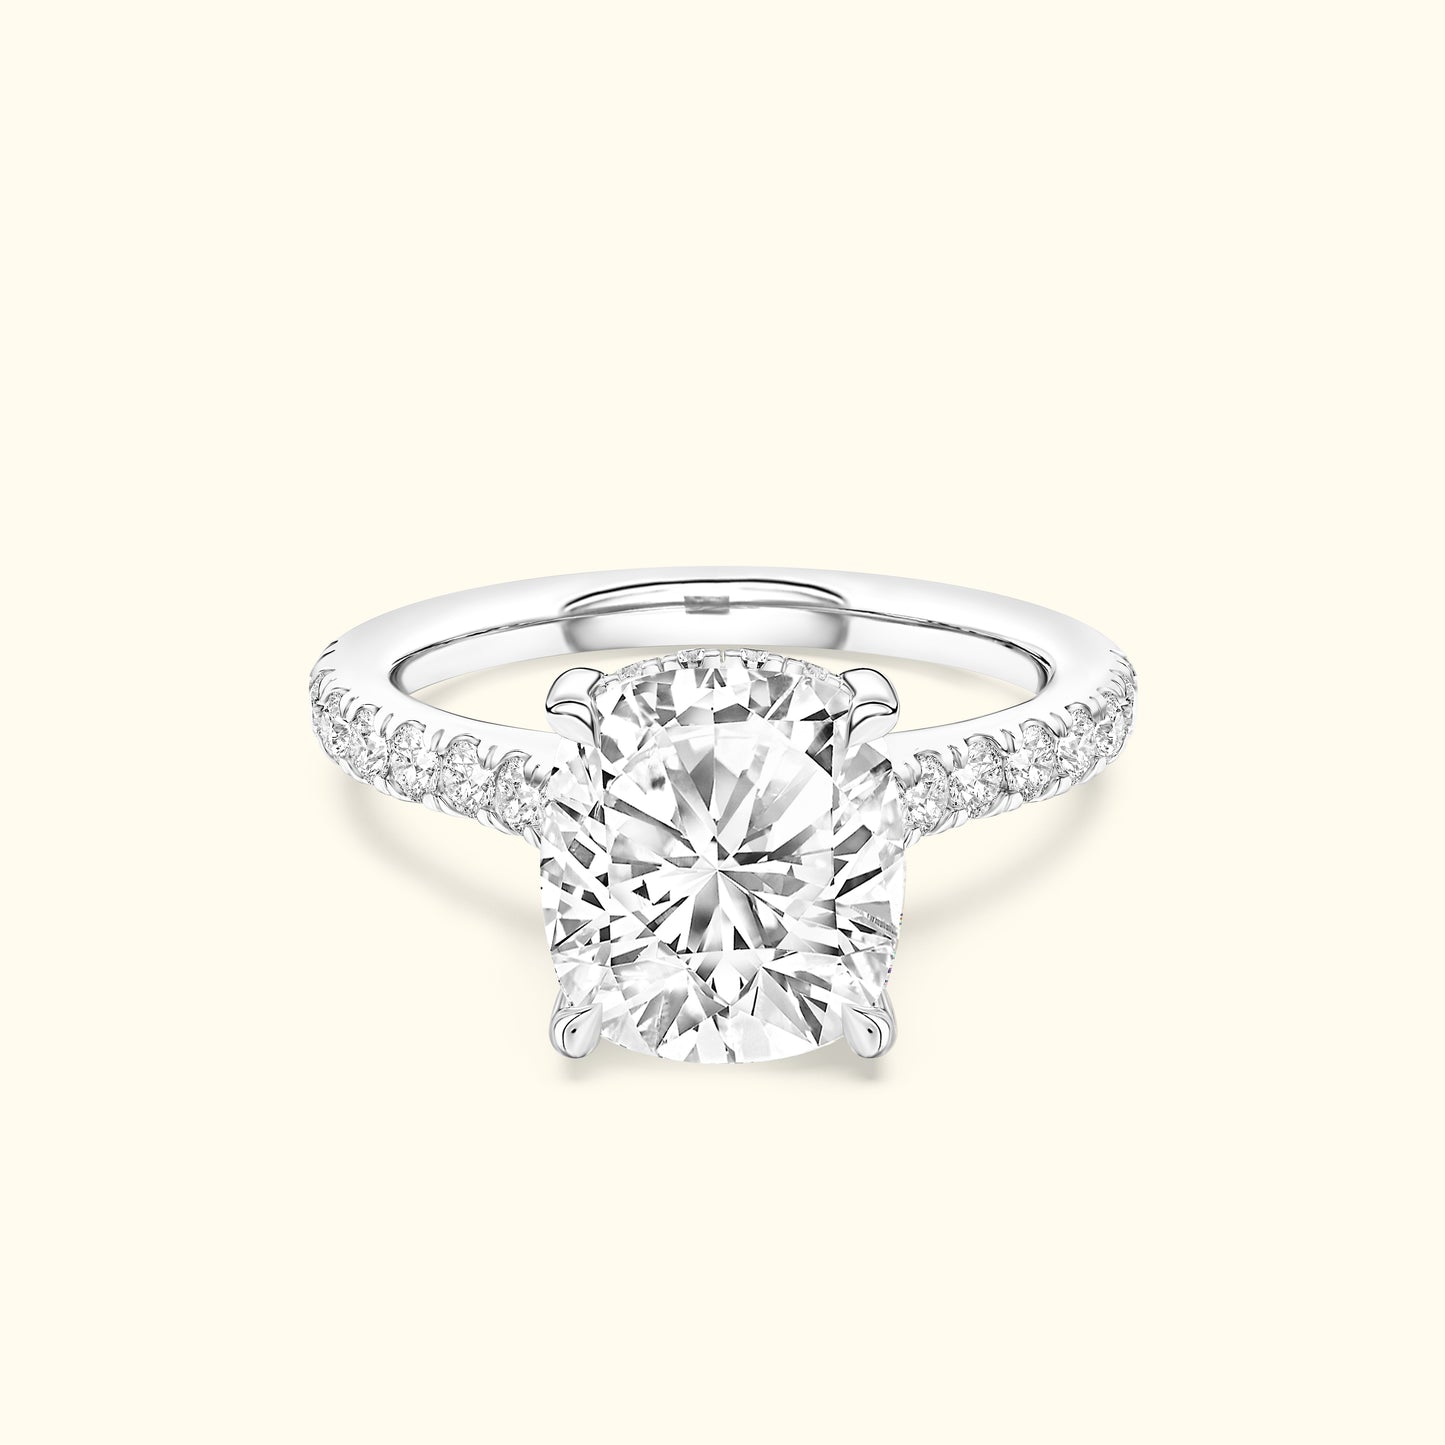 'Elizabeth' Ring with 5.03ct Cushion Diamond